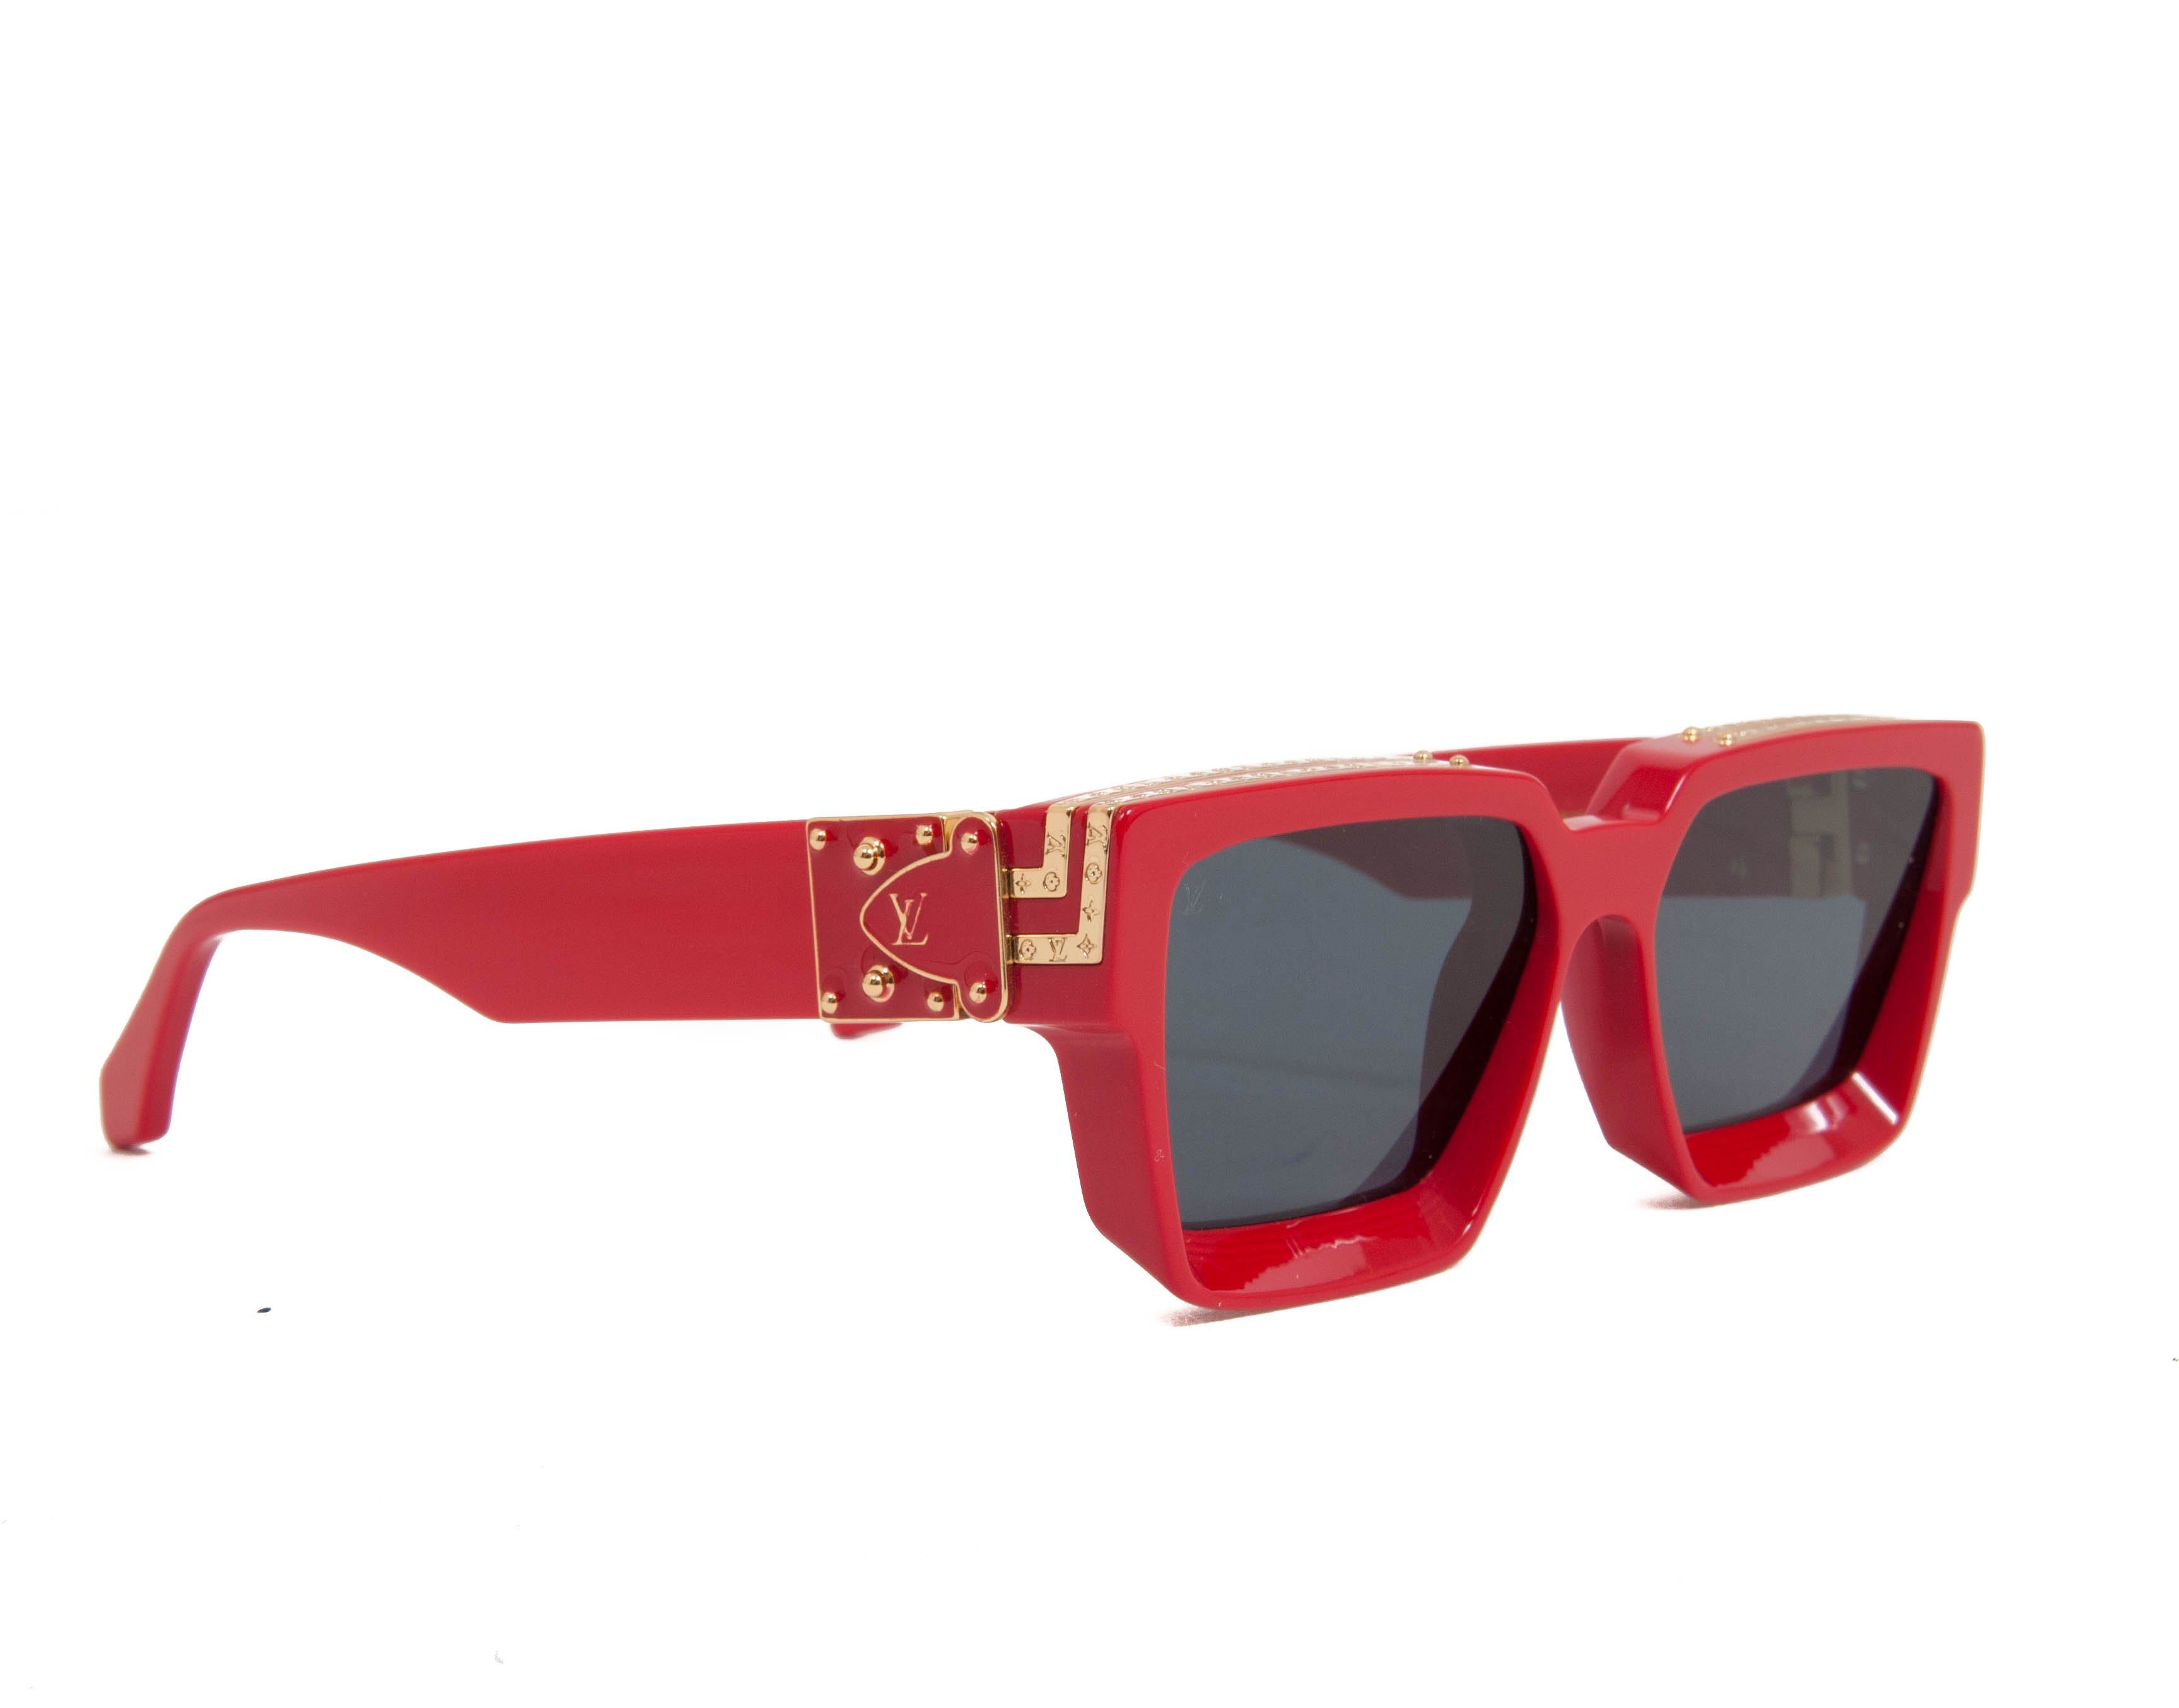 LV Millionairs 1.01 sunglasses missing box glasses only fully authentic   Sunglasses women aviators, Sunglasses, Louis vuitton millionaire sunglasses